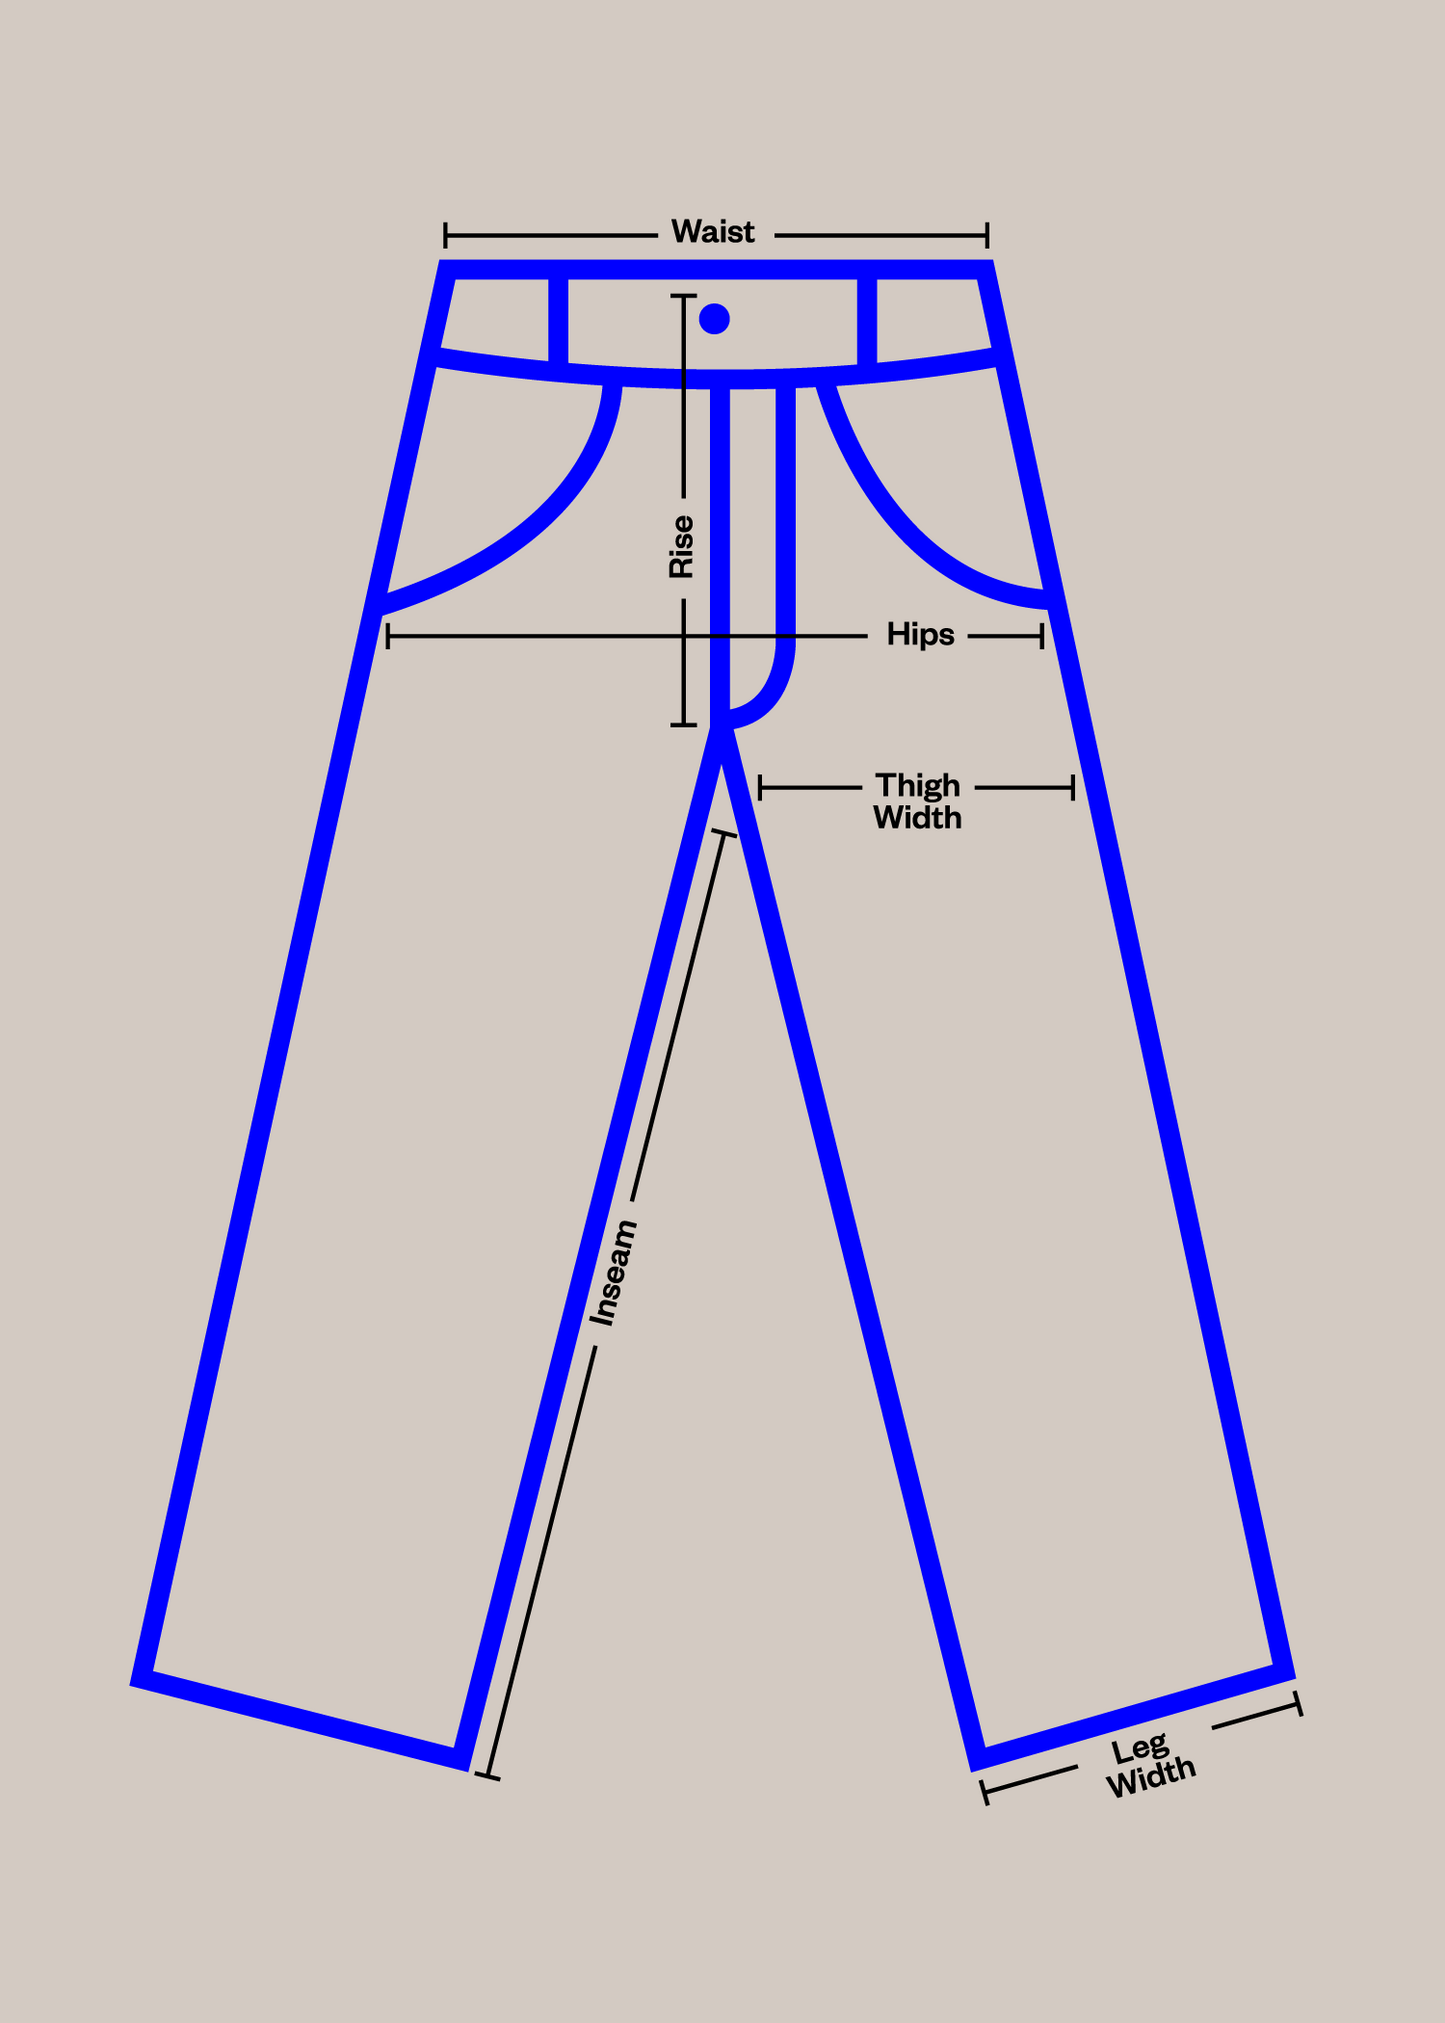 1960s Sears Darkwash Denim Carpenter Jeans Size Women's 36 Men's 38